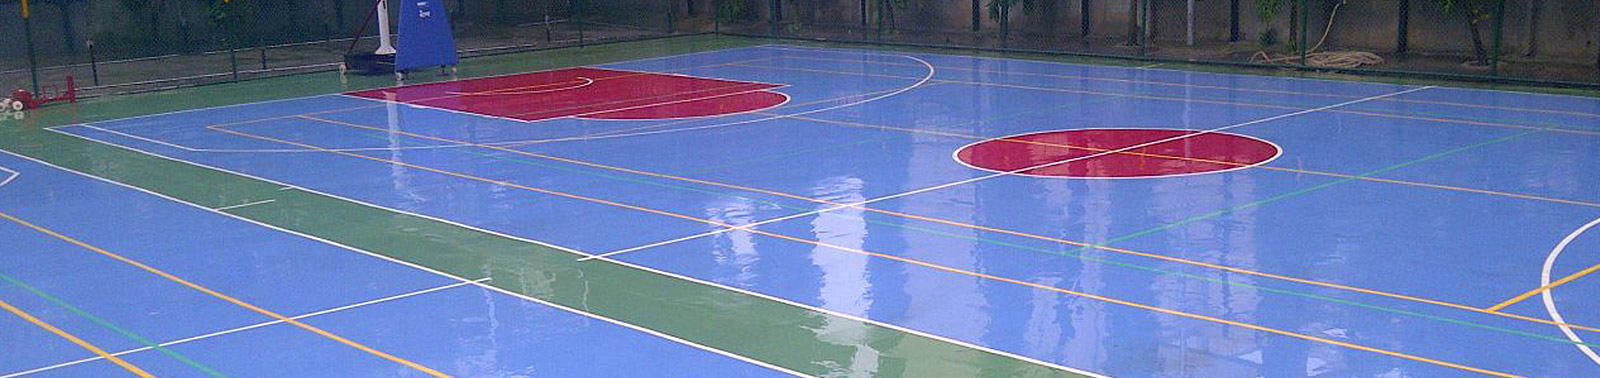 PU Polyurethane Synthetic Sports Flooring